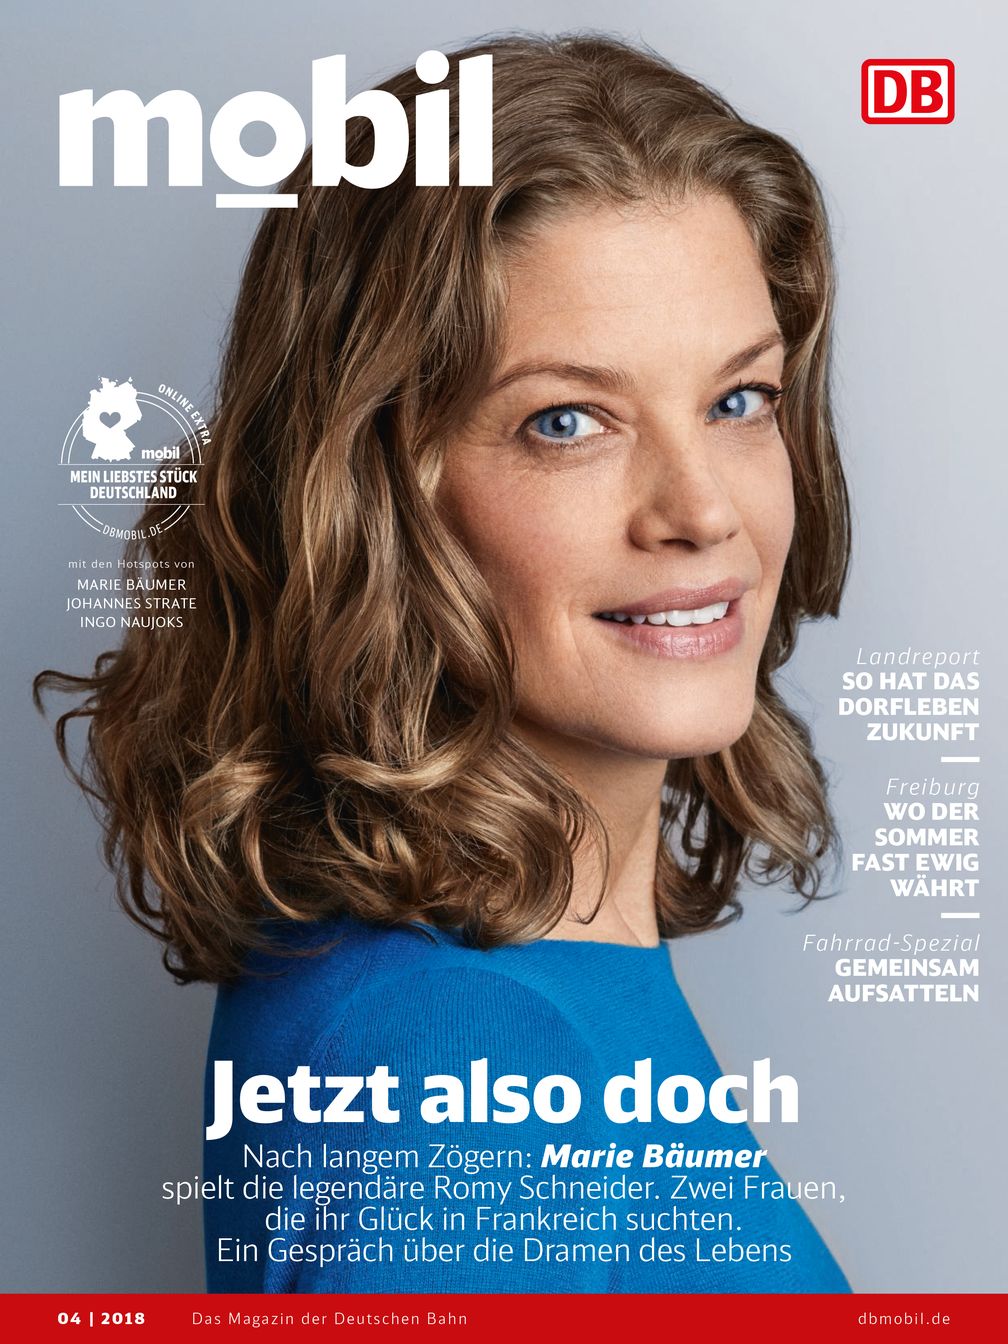 Cover DB MOBIL - Ausgabe 04/18. Bild: "obs/TERRITORY/DB MOBIL"